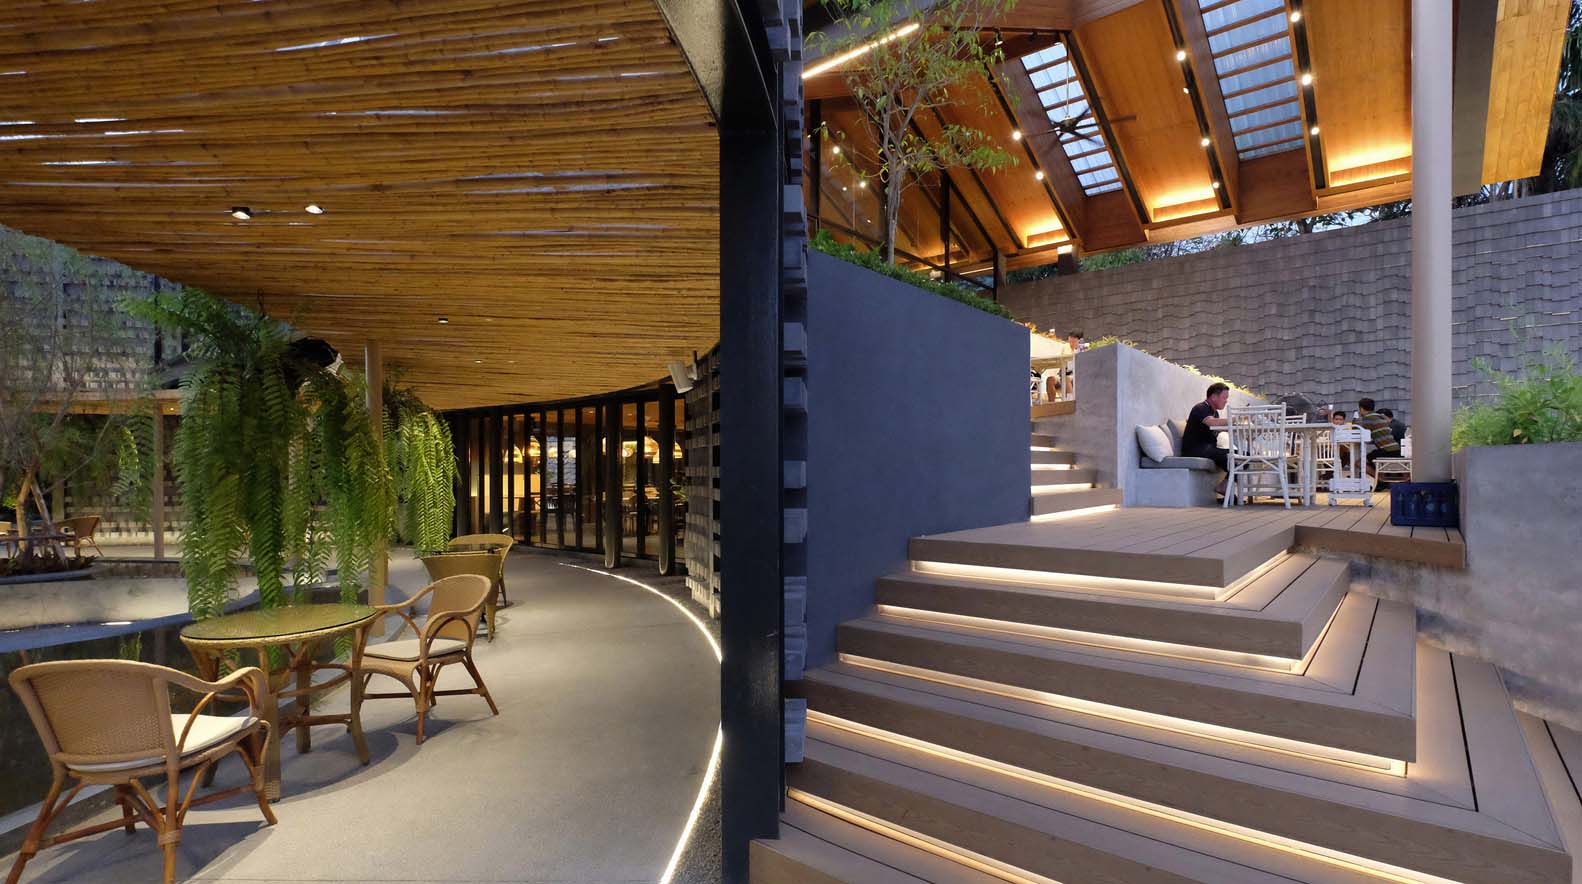 Looklen Architects,餐厅设计,Baan Nhuer Nham Restaurant,泰国,餐厅设计案例,国外餐厅设计,餐厅设计方案,花园餐厅,休闲餐厅